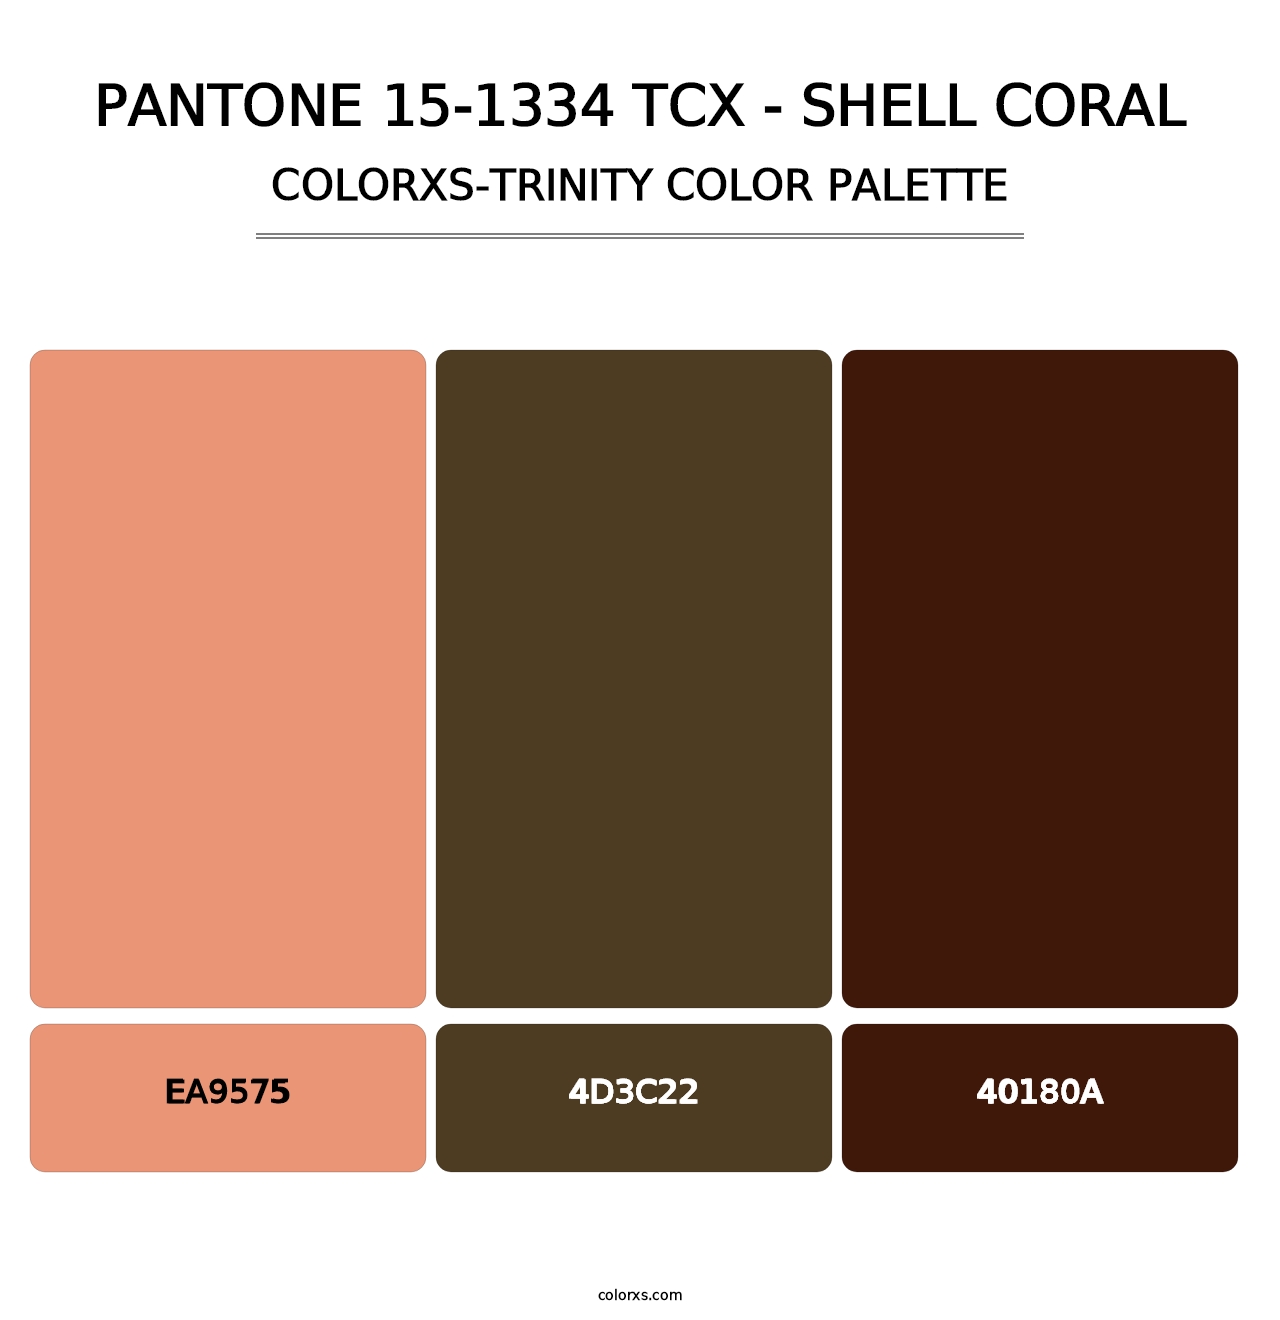 PANTONE 15-1334 TCX - Shell Coral - Colorxs Trinity Palette